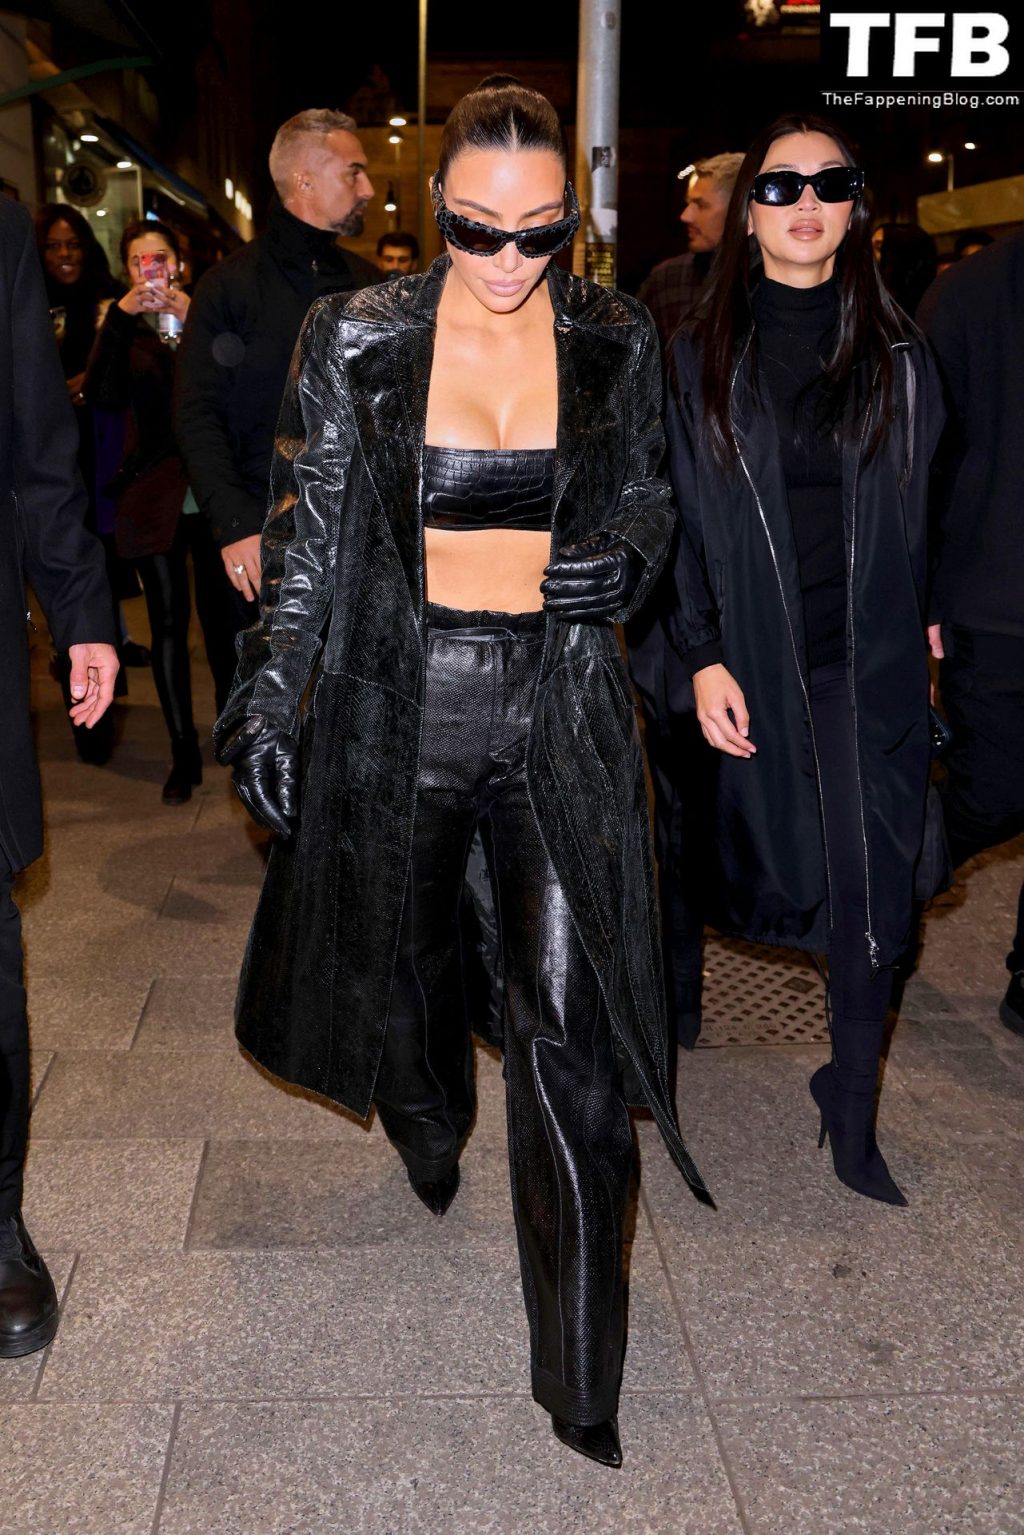 Kim Kardashian Sexy The Fappening Blog 9 1 1024x1535 - Kim Kardashian Looks Hot in Milan (40 Photos)